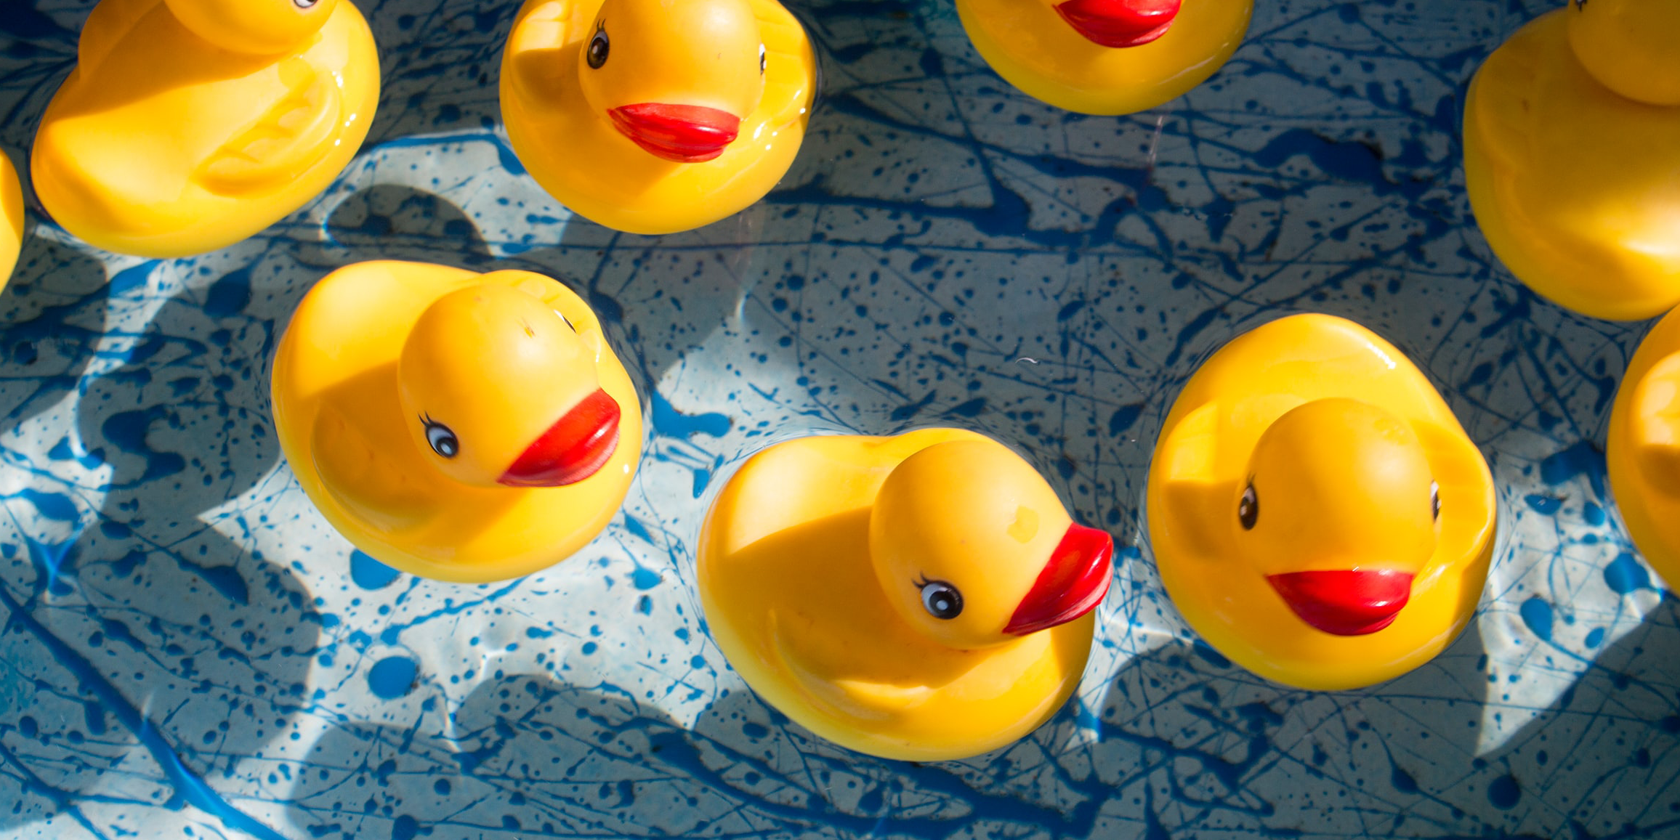 Seven yellow rubber ducks sitting in water